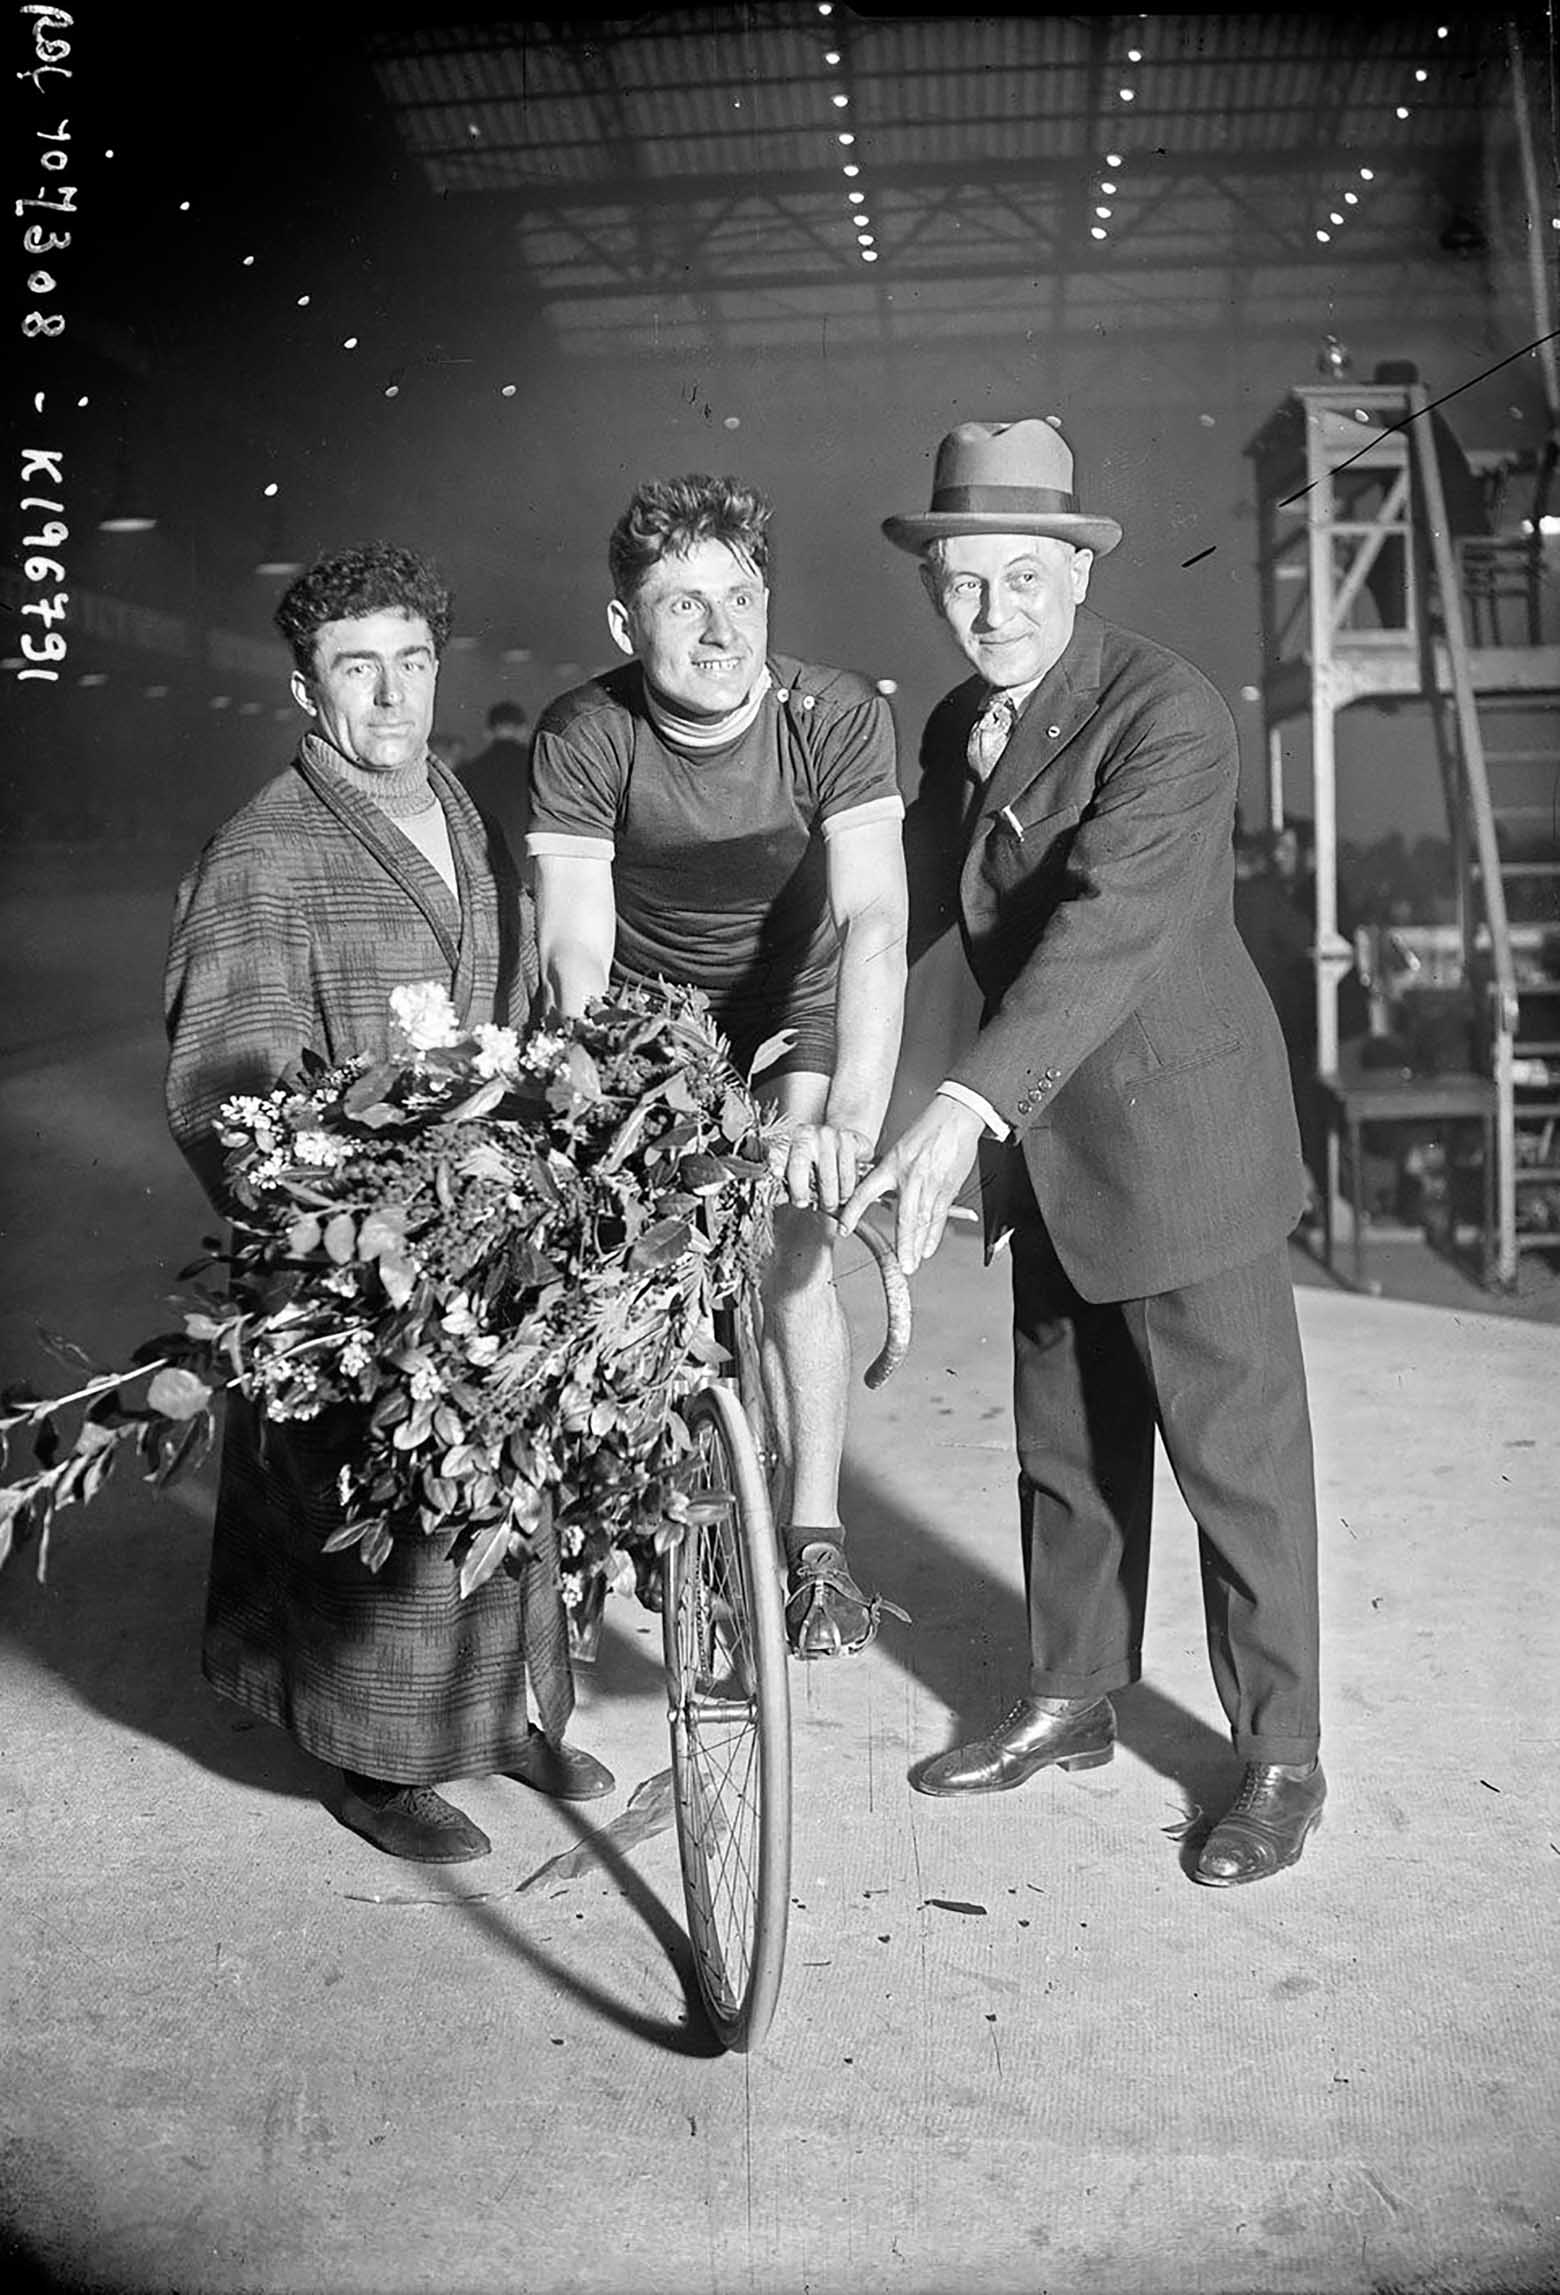 Alfredo Binda - February 1926 Velodrome d'Hiver main image